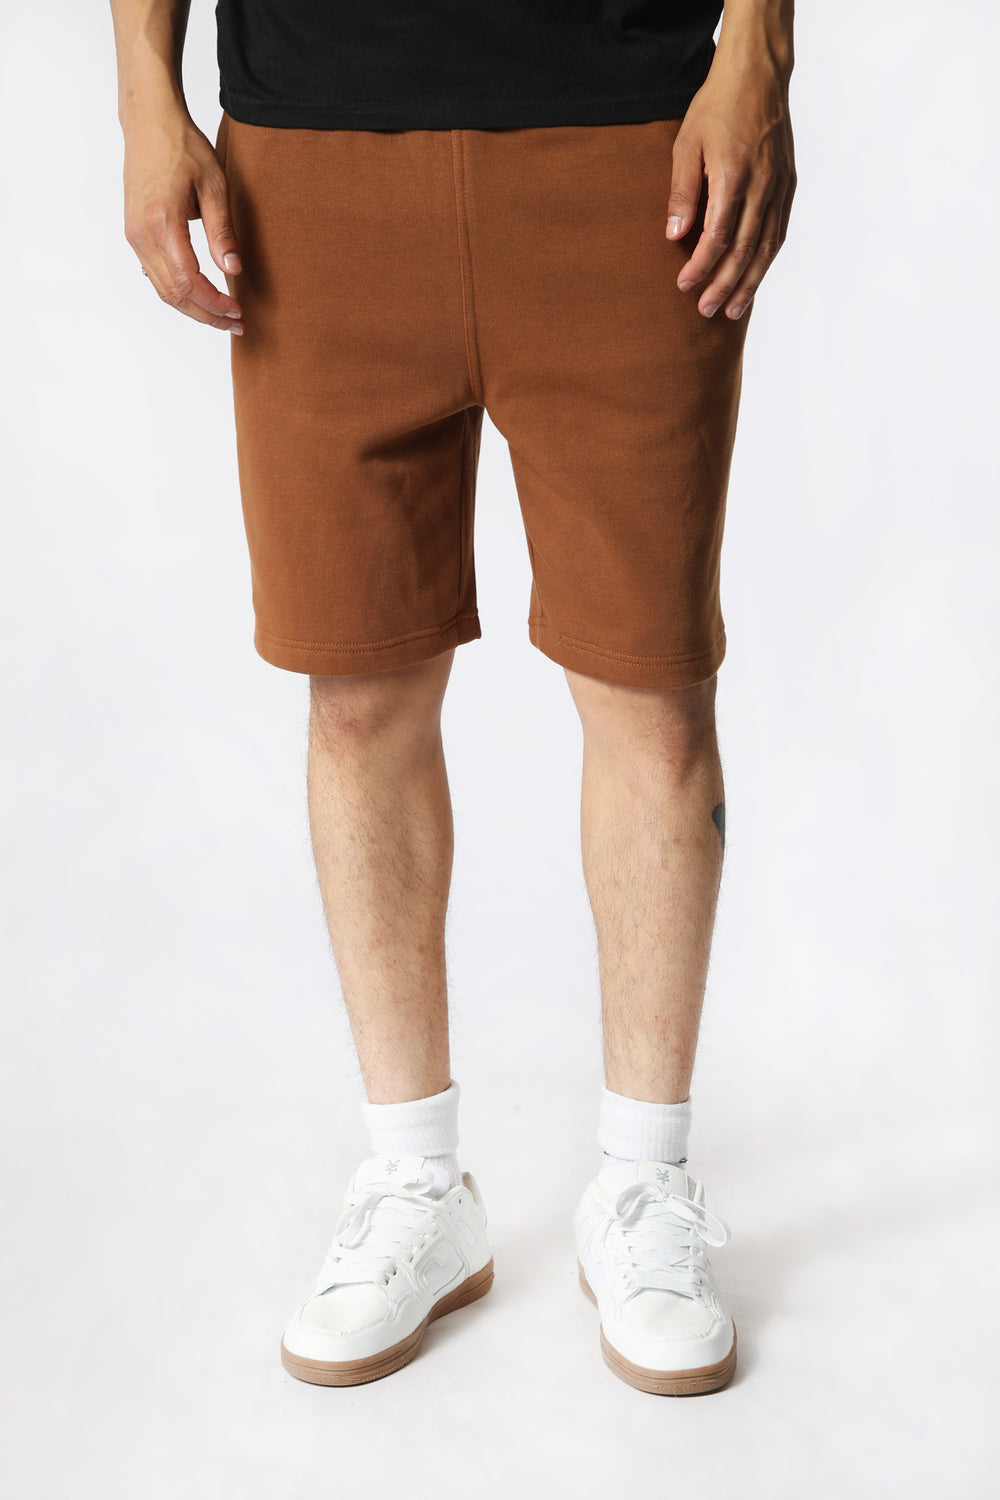 Amnesia Mens Basic Fleece Shorts Medium Brown